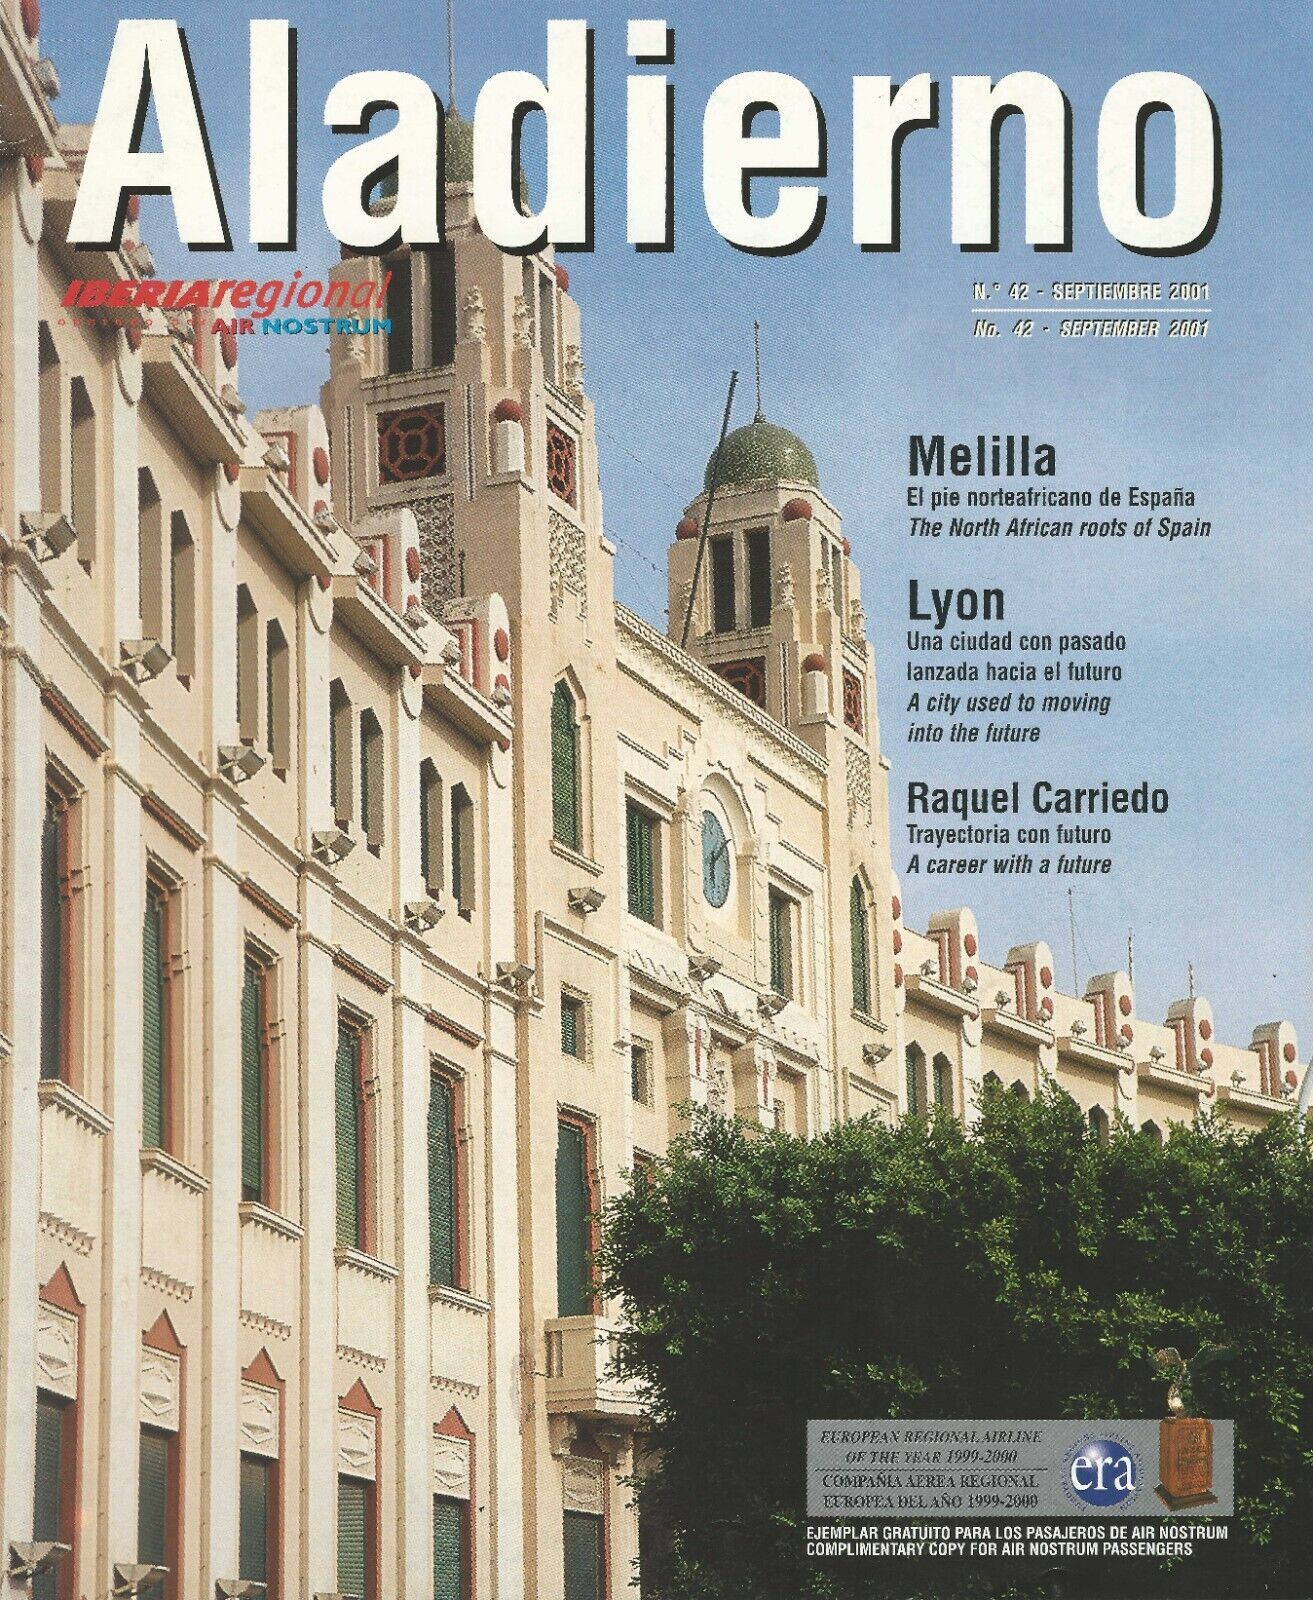 Iberia Regional / Air Nostrum Inflight Magazine  September 2001 =